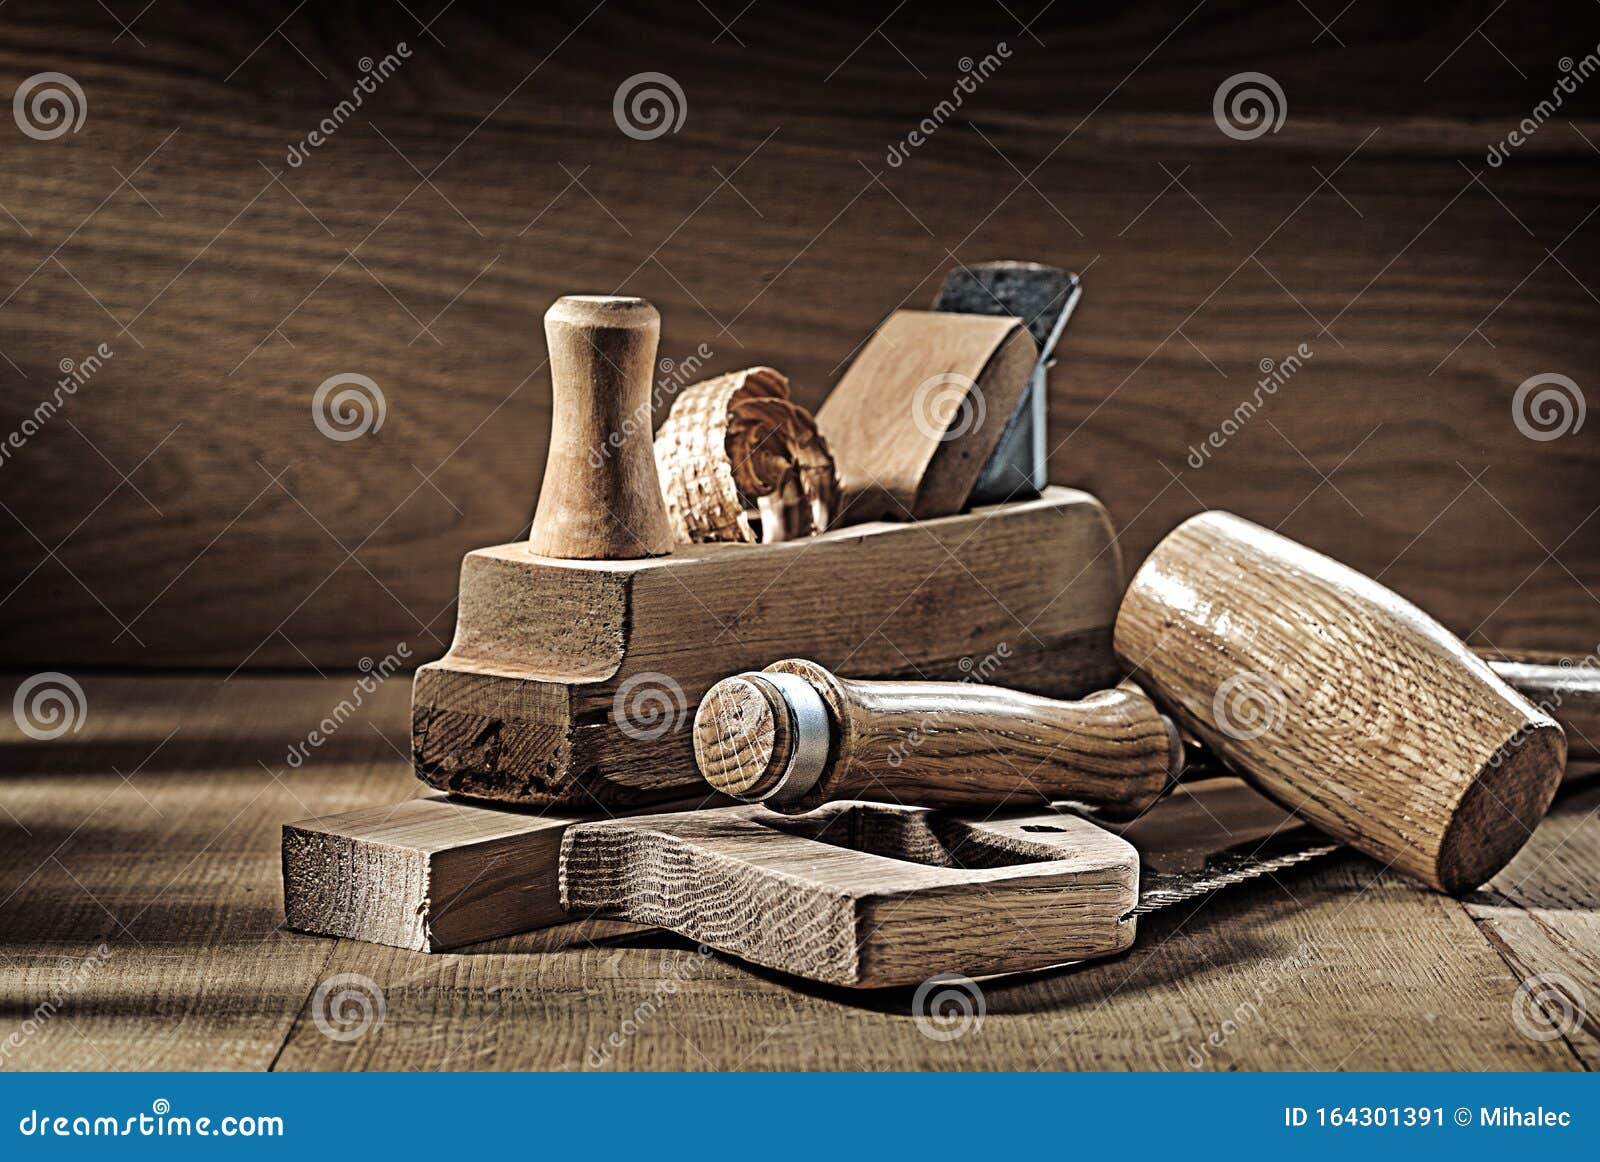 carpenter tools woodworkers plane handsaw chisel mallet on vintage wood background